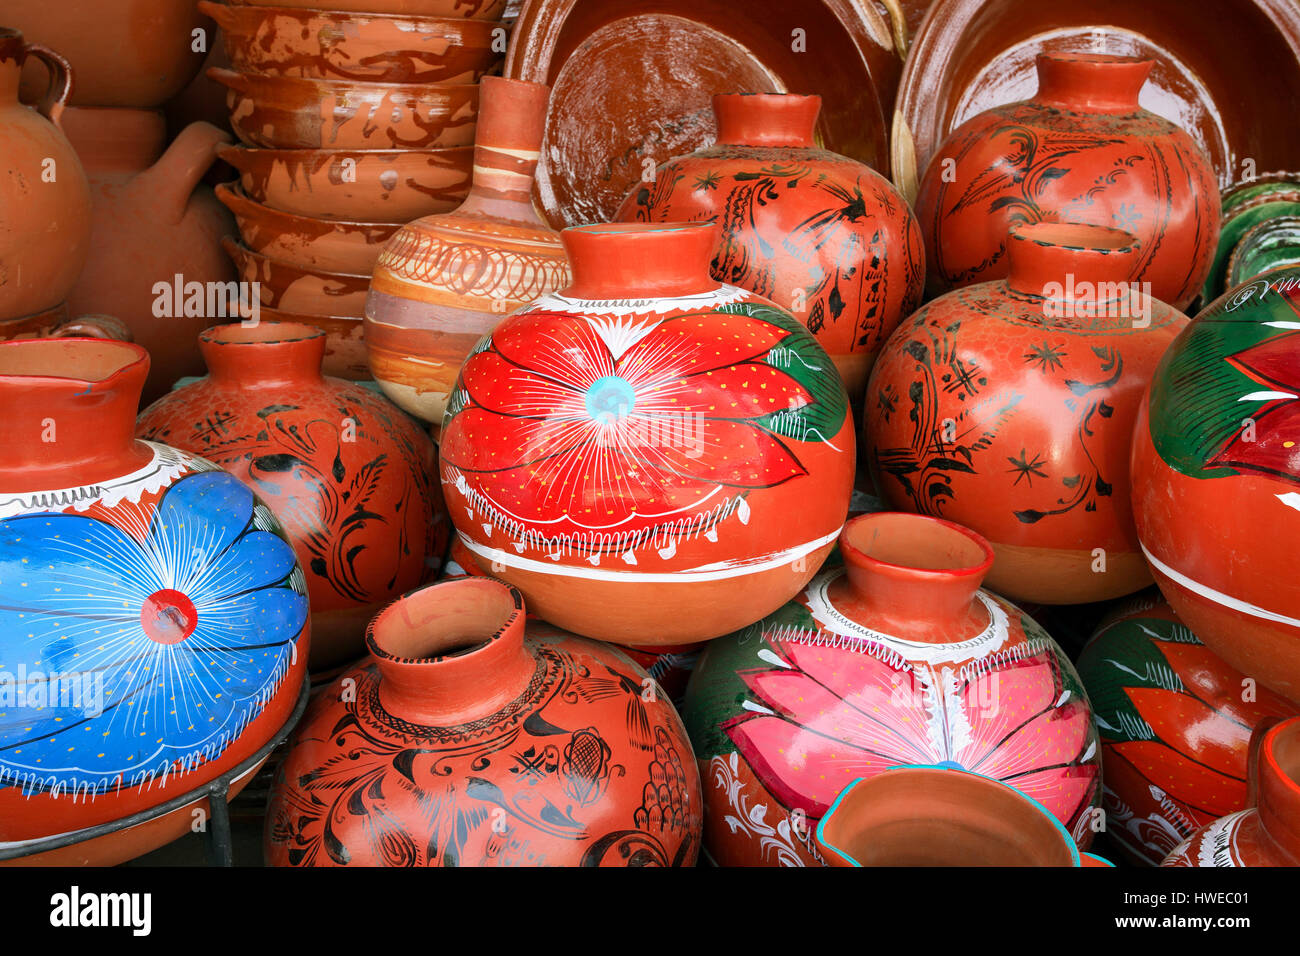 https://c8.alamy.com/compes/hwec01/colorida-ceramica-para-la-venta-en-un-mercado-callejero-cerca-de-chilchota-michoacan-mexico-hwec01.jpg